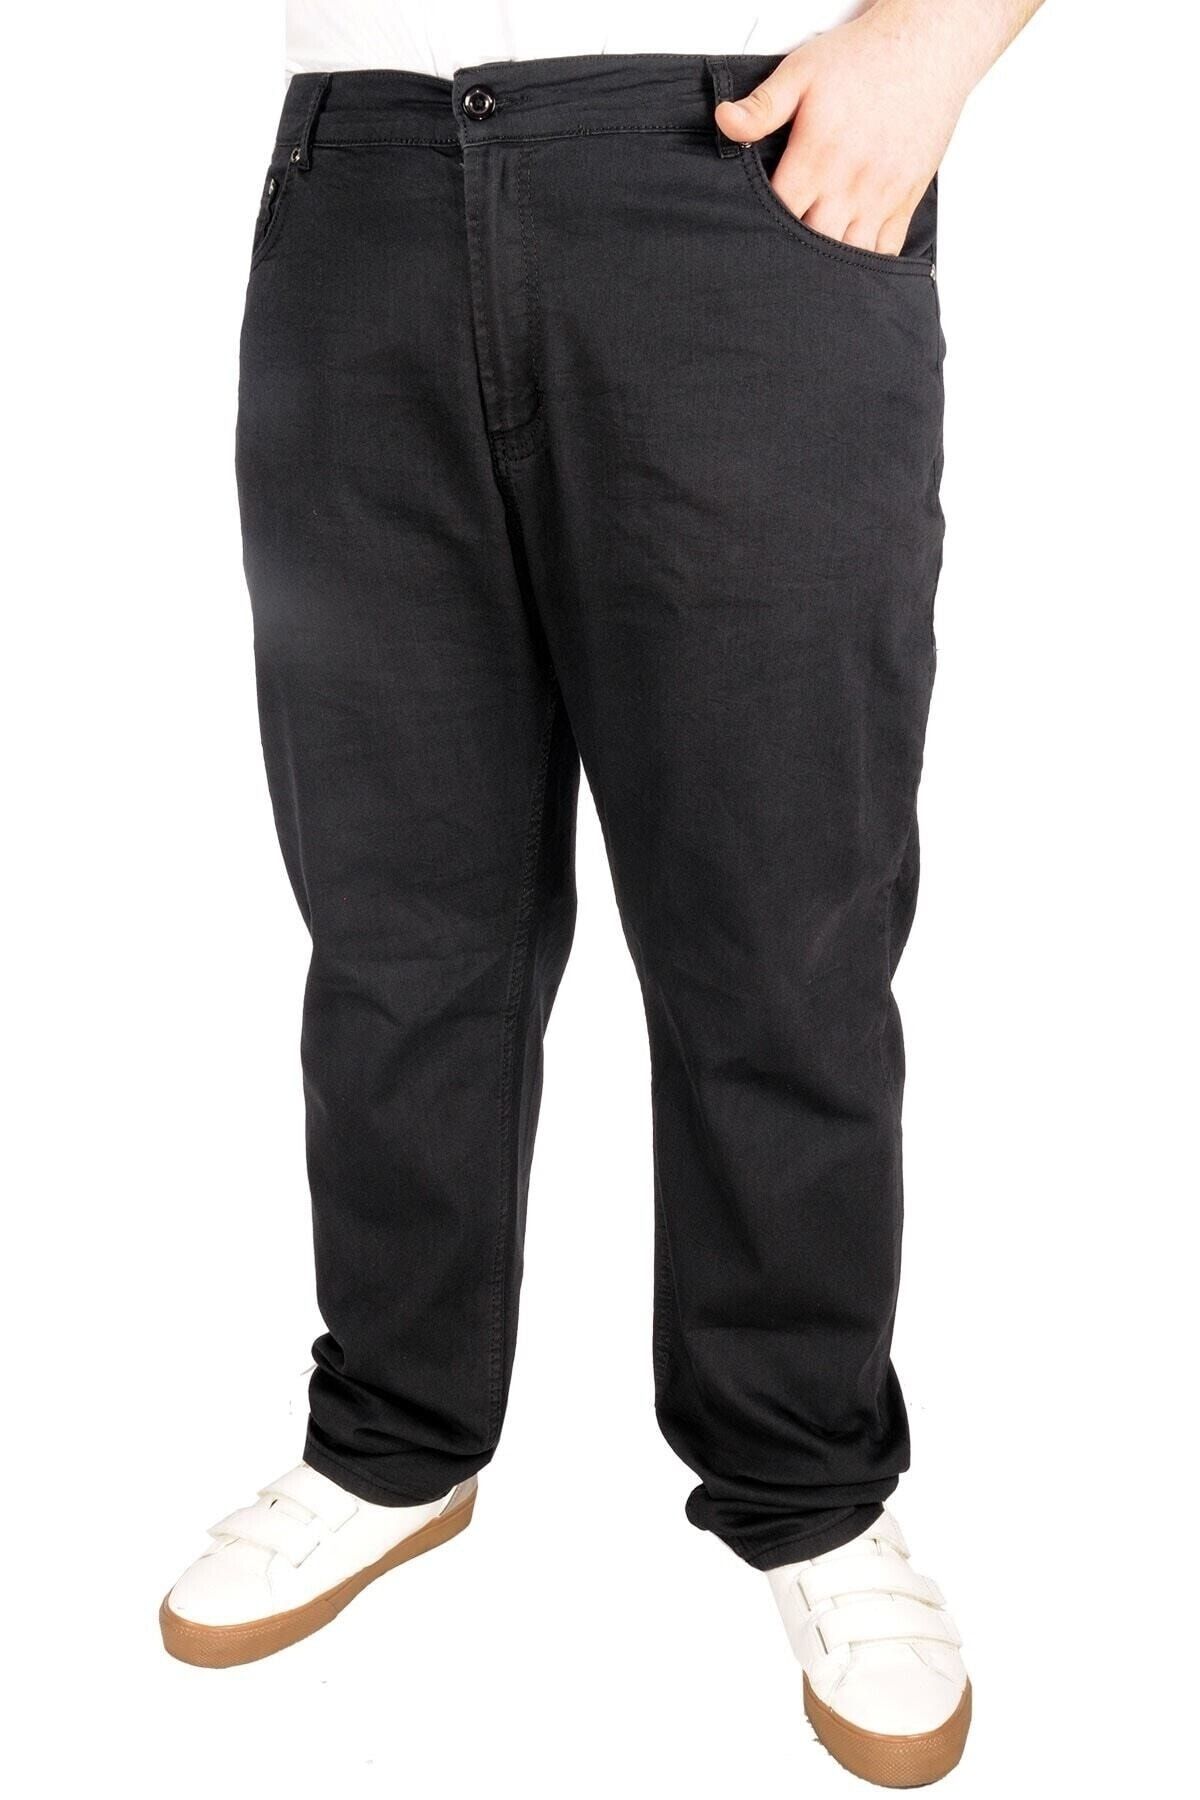 Modexl Büyük Beden Erkek Pantolon Kot 5cep Thin Focus 21921 Siyah